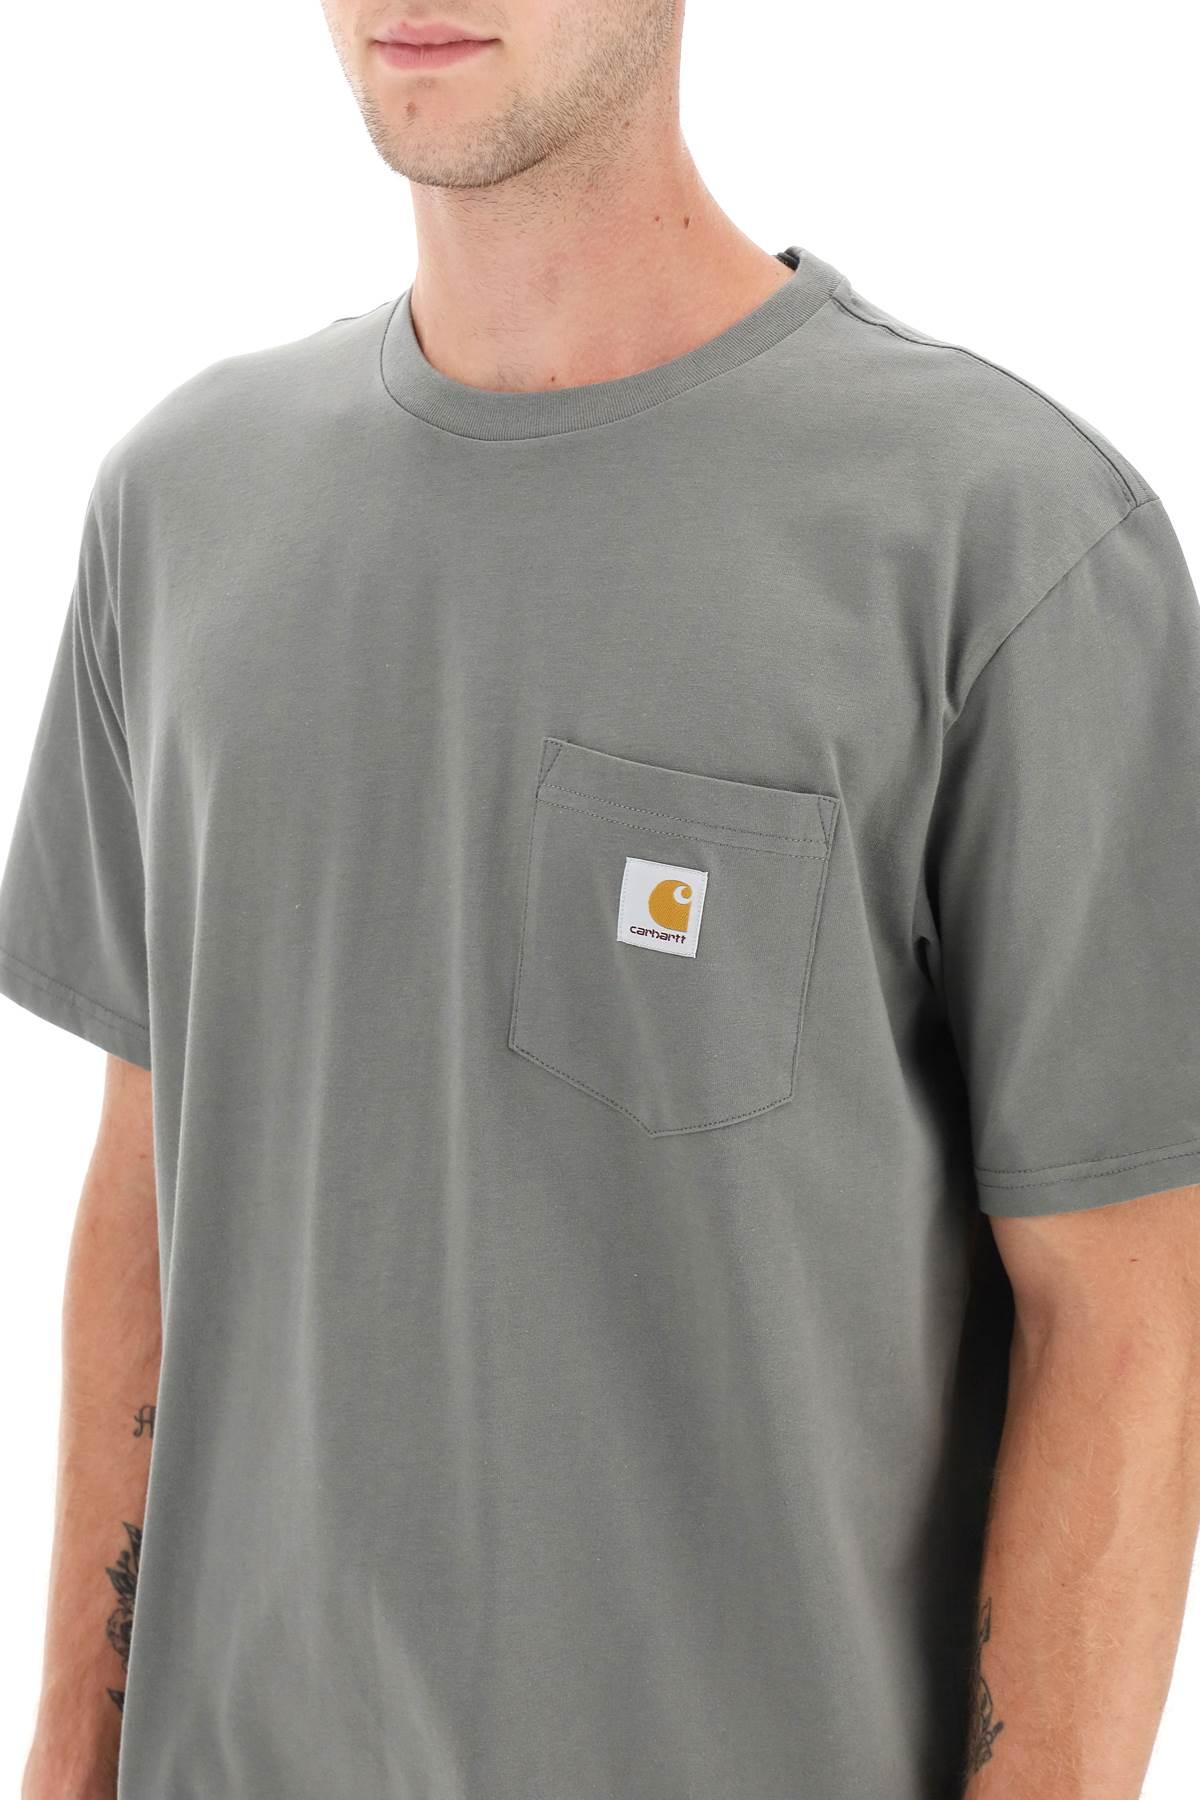 Carhartt WIP pocket t-shirt